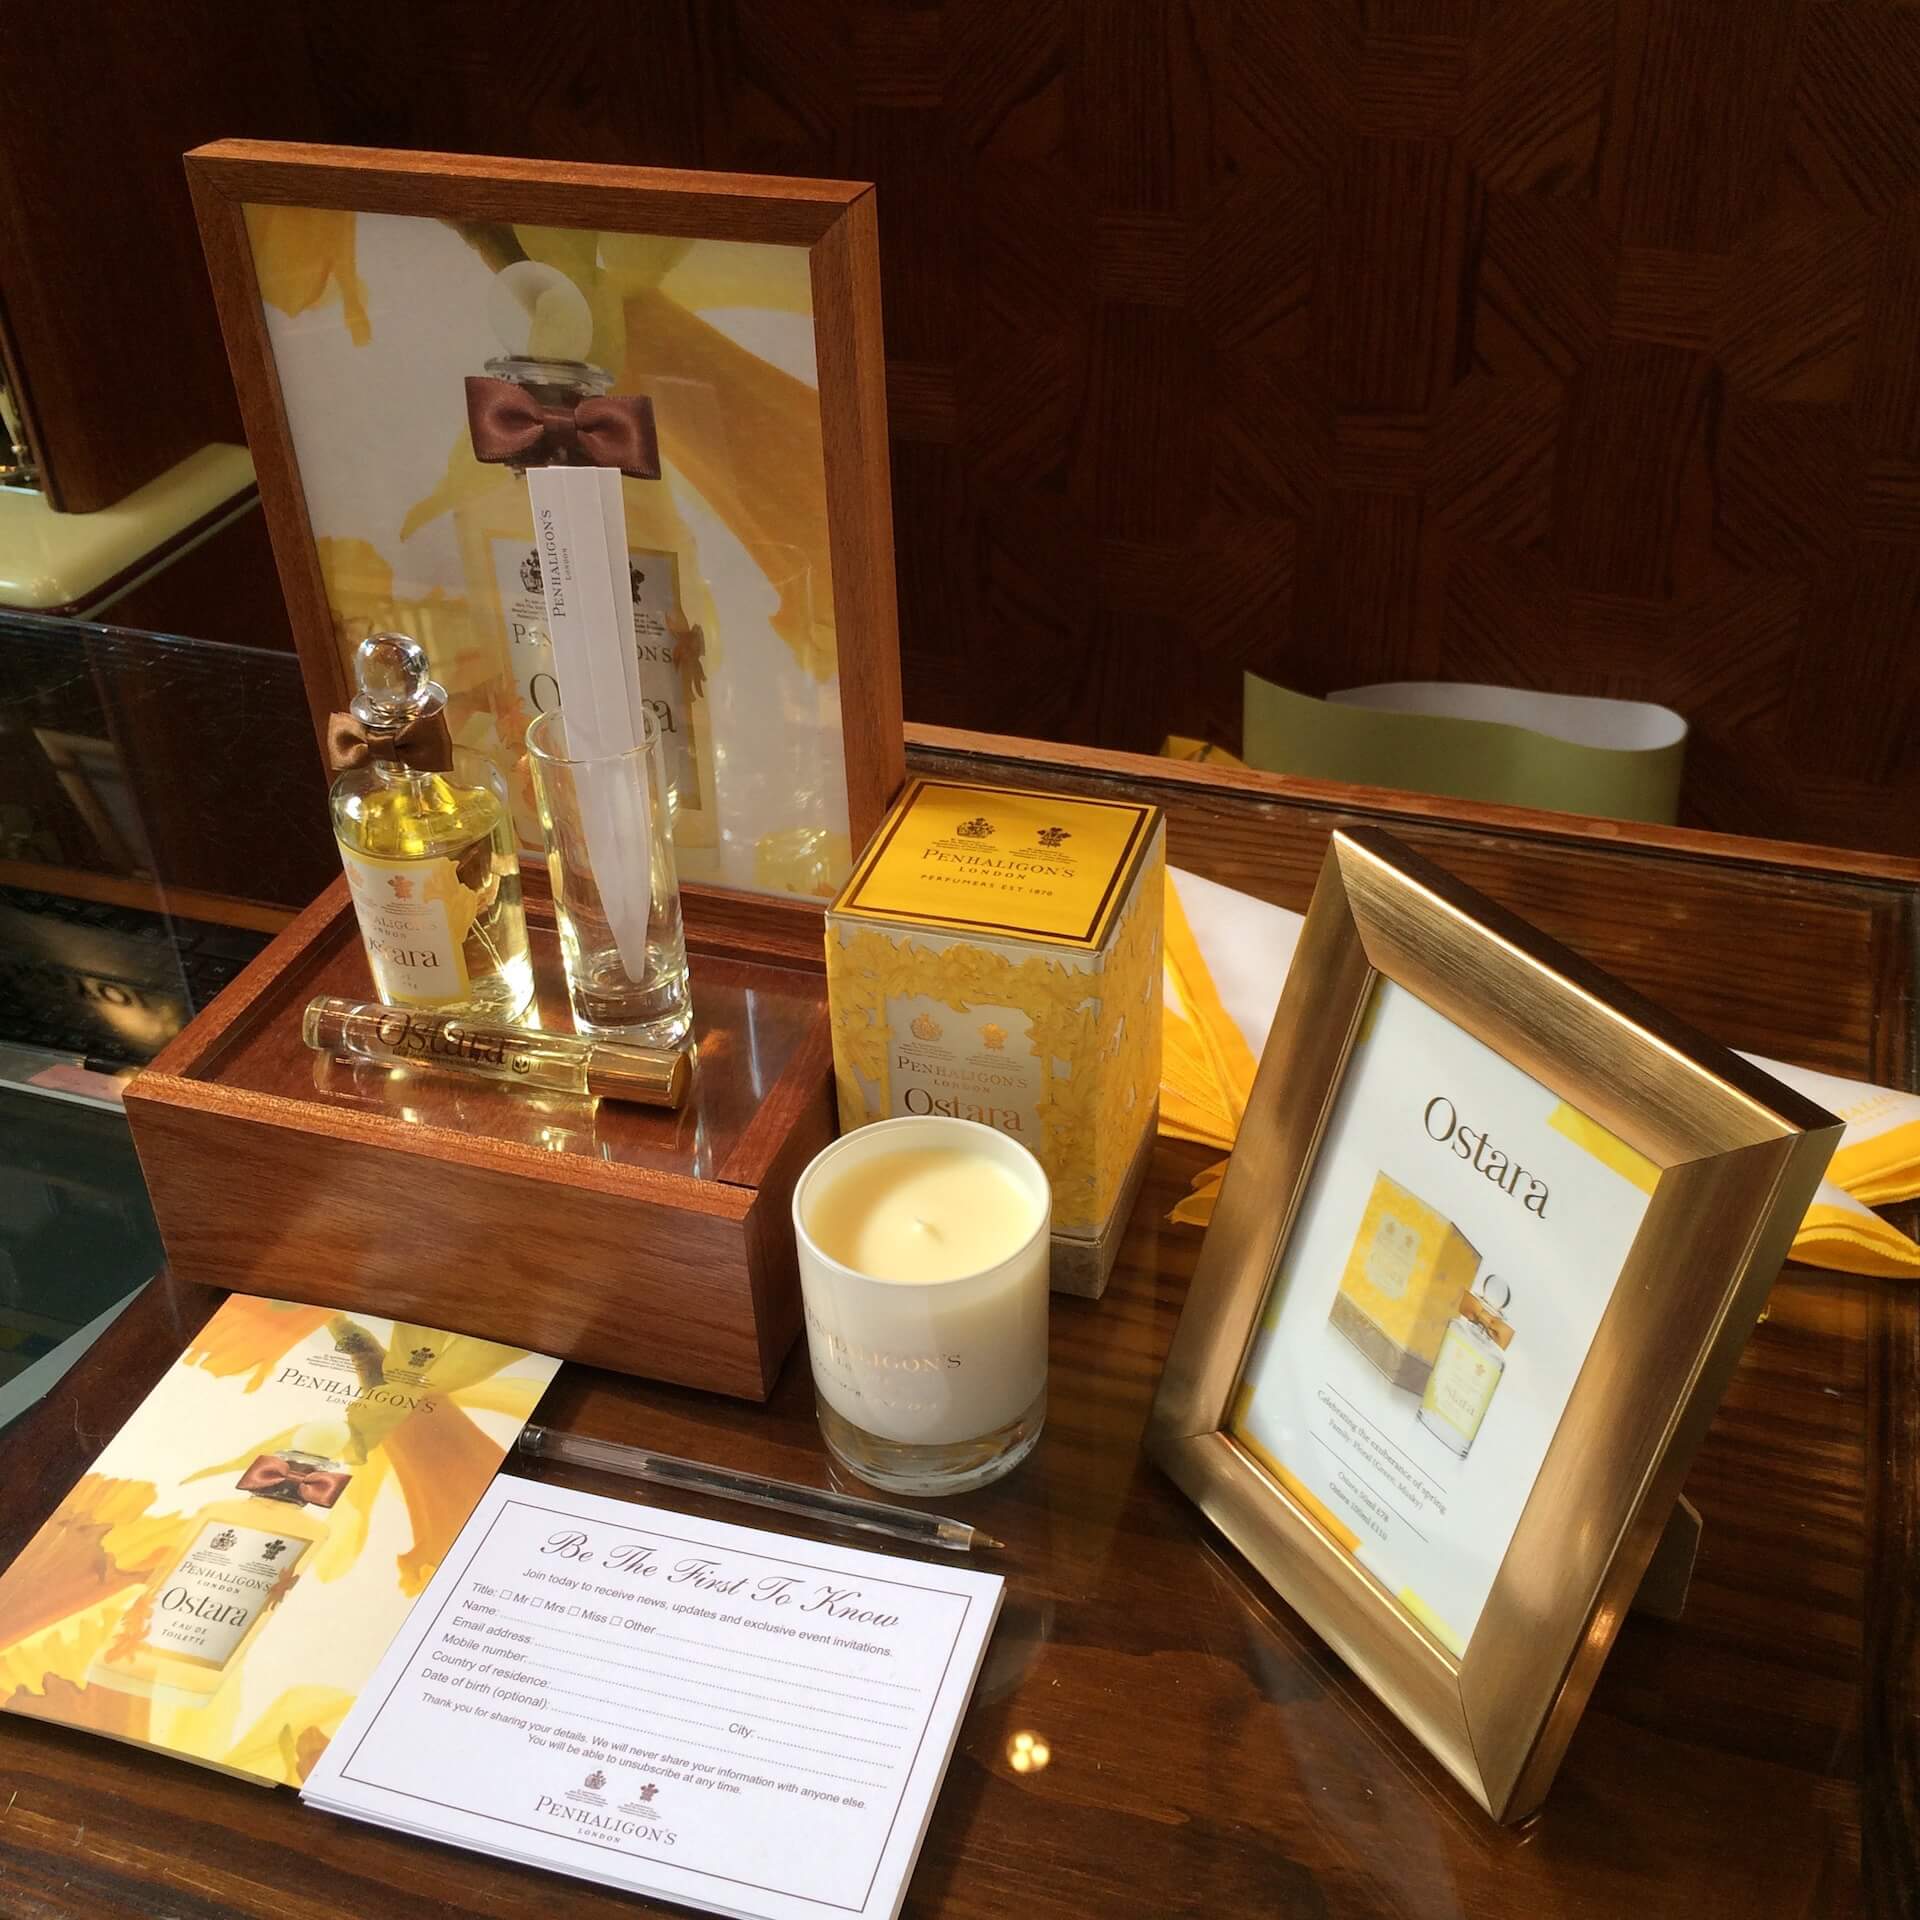 Penhaligons perfume pos unit London instore display retail design